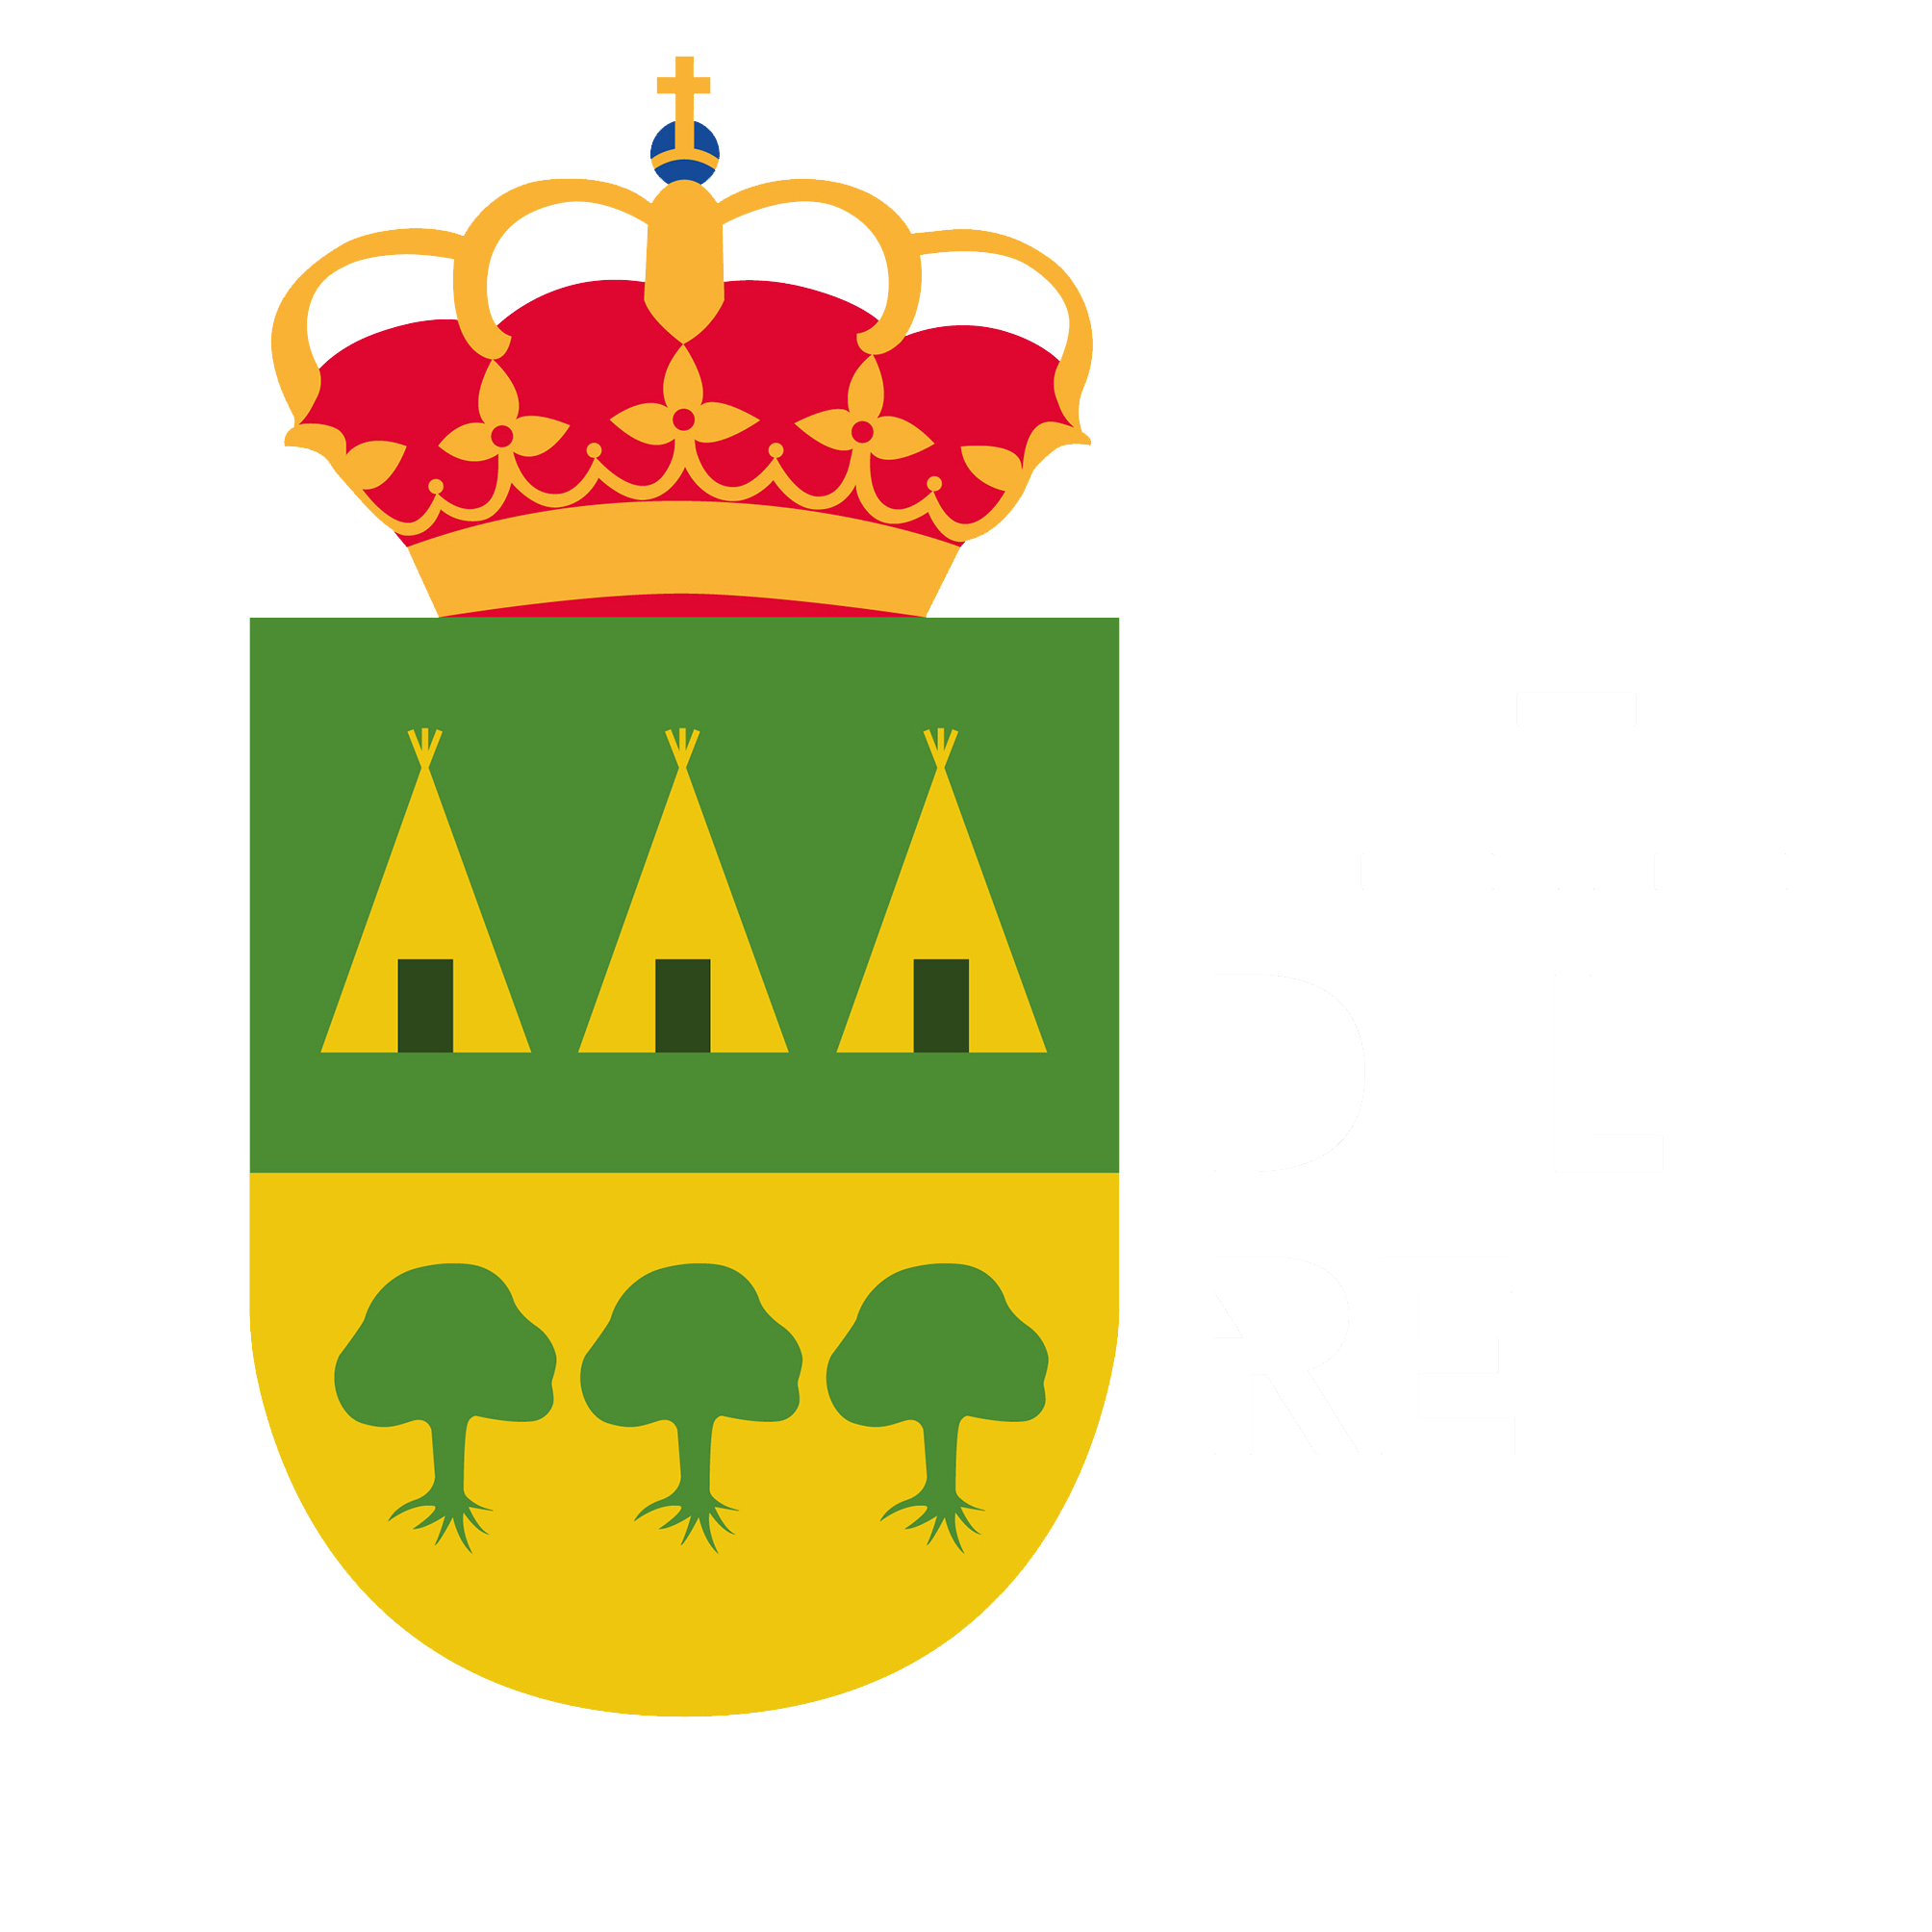 Soto del Real (Madrid)